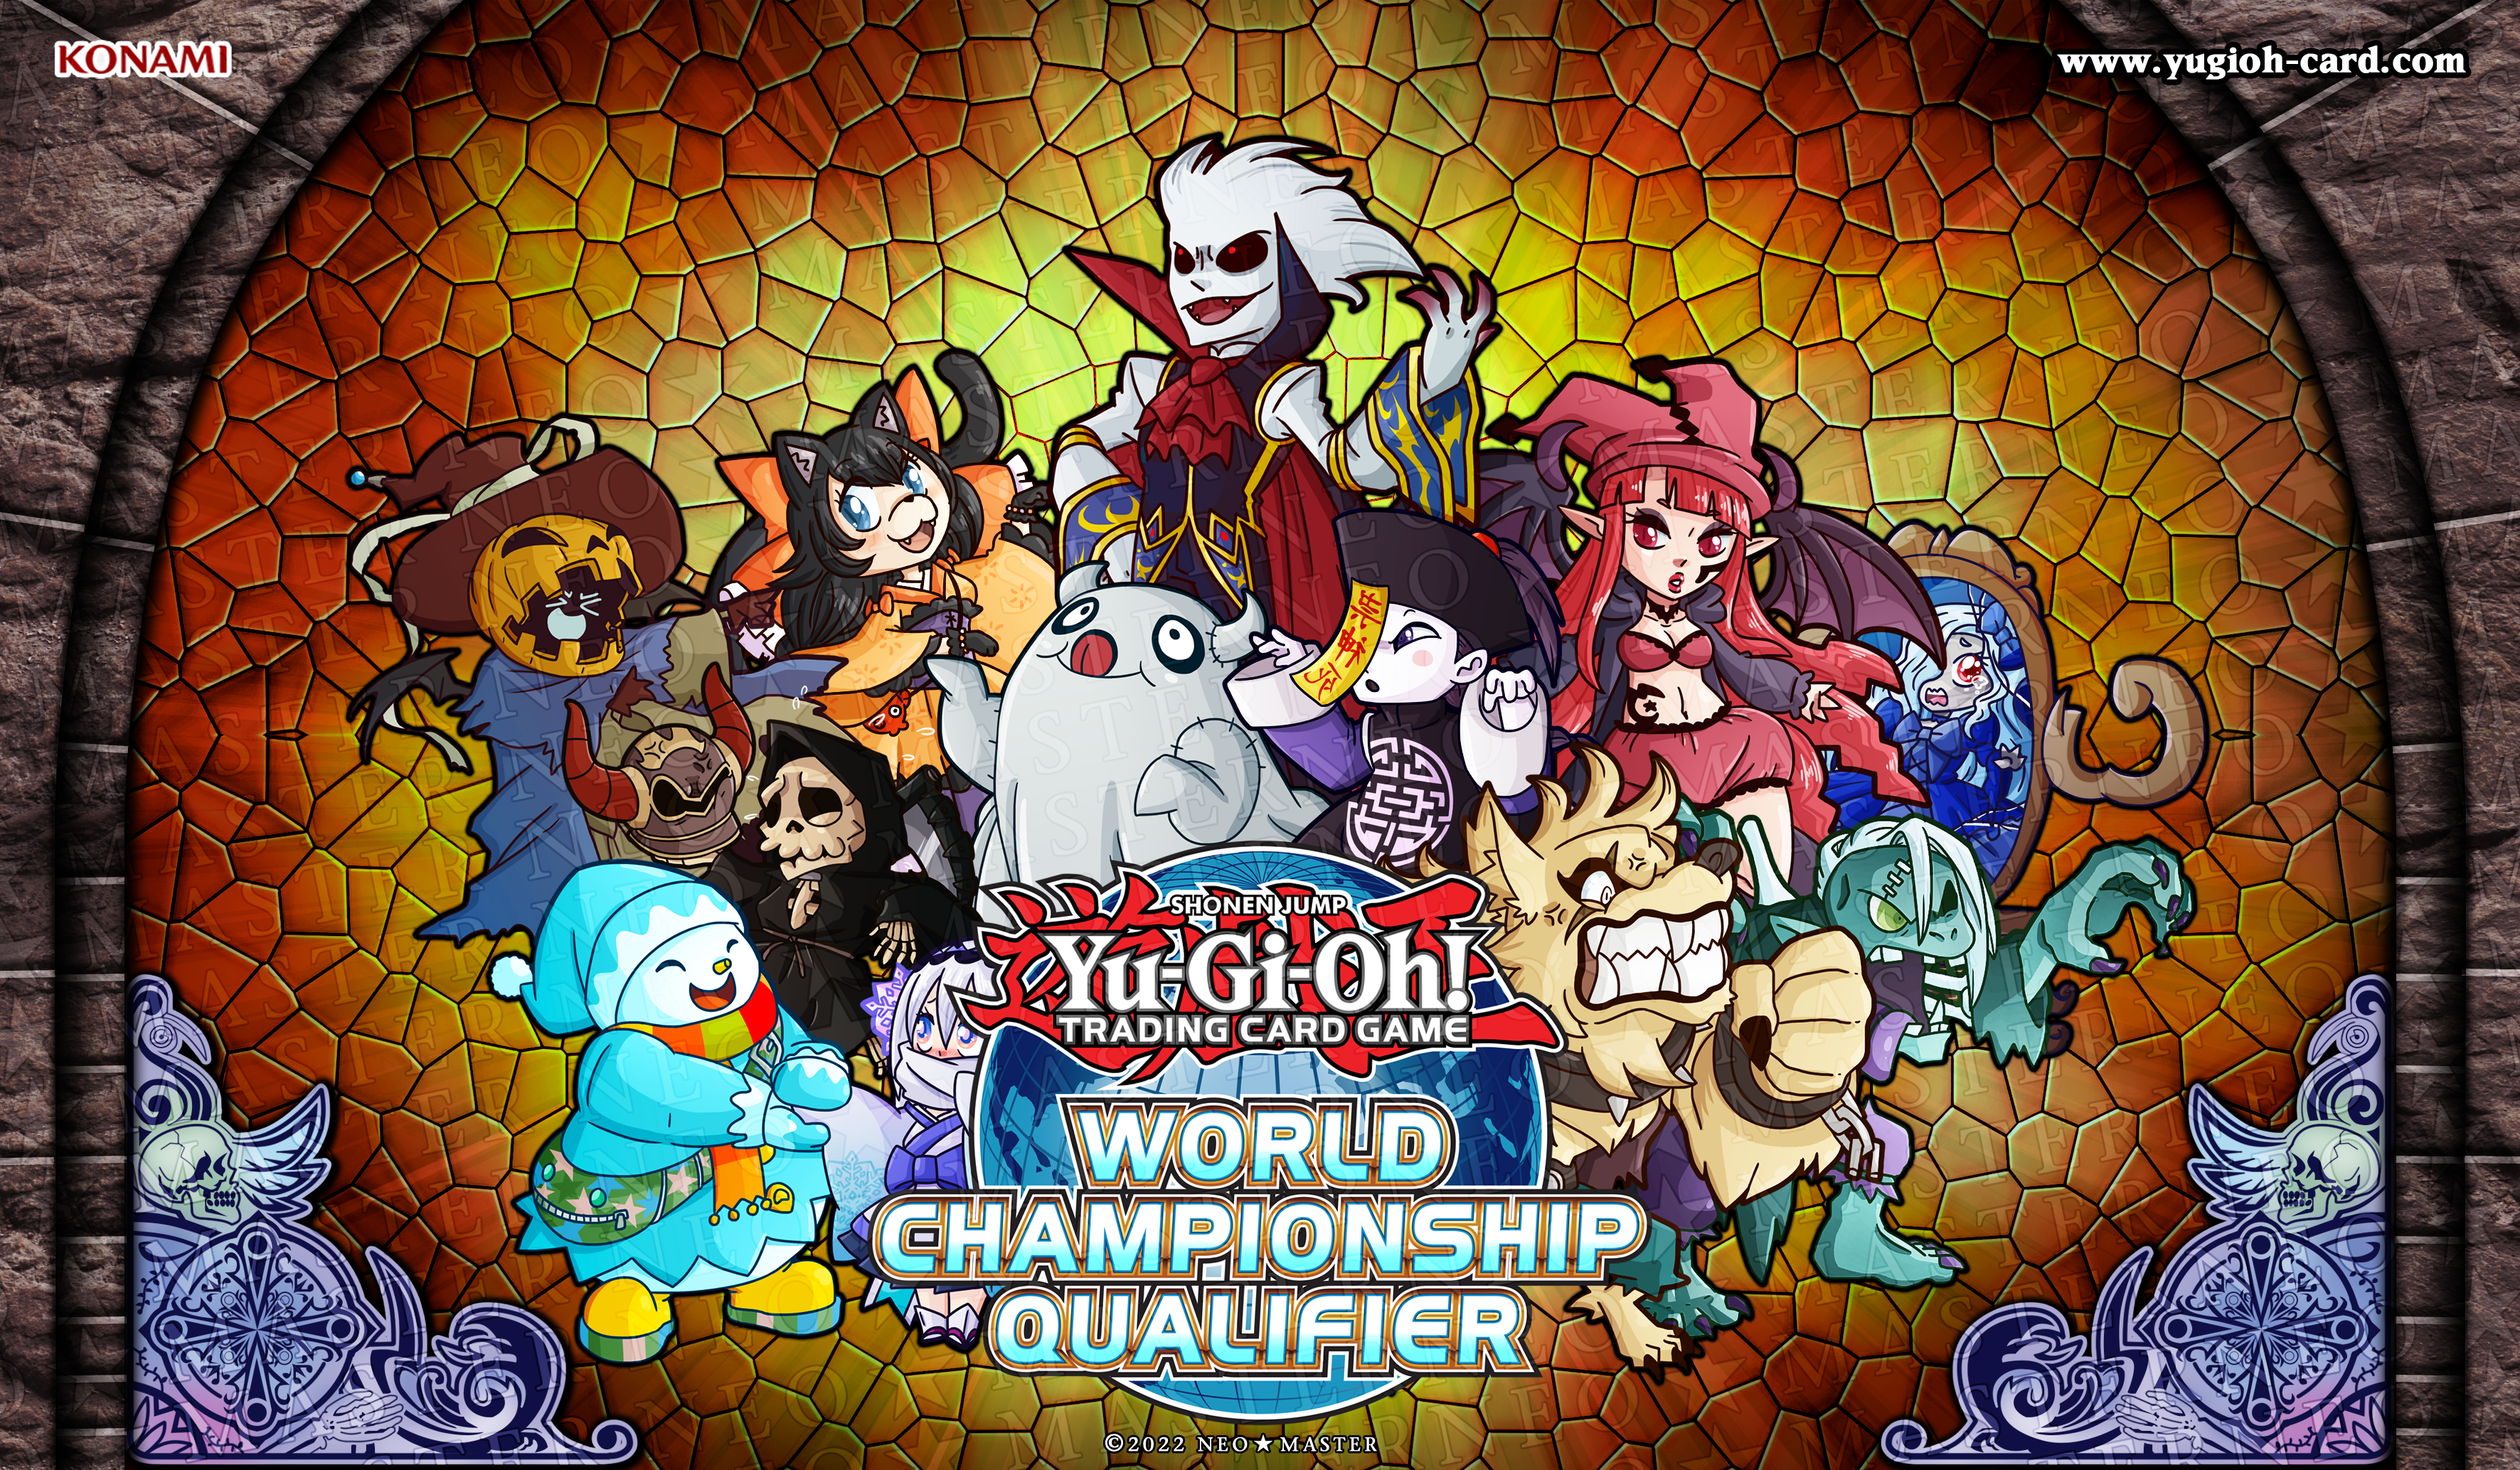 Yu-Gi-Oh! World Championship 2012 PlayMat by DaniOcampo1992 on